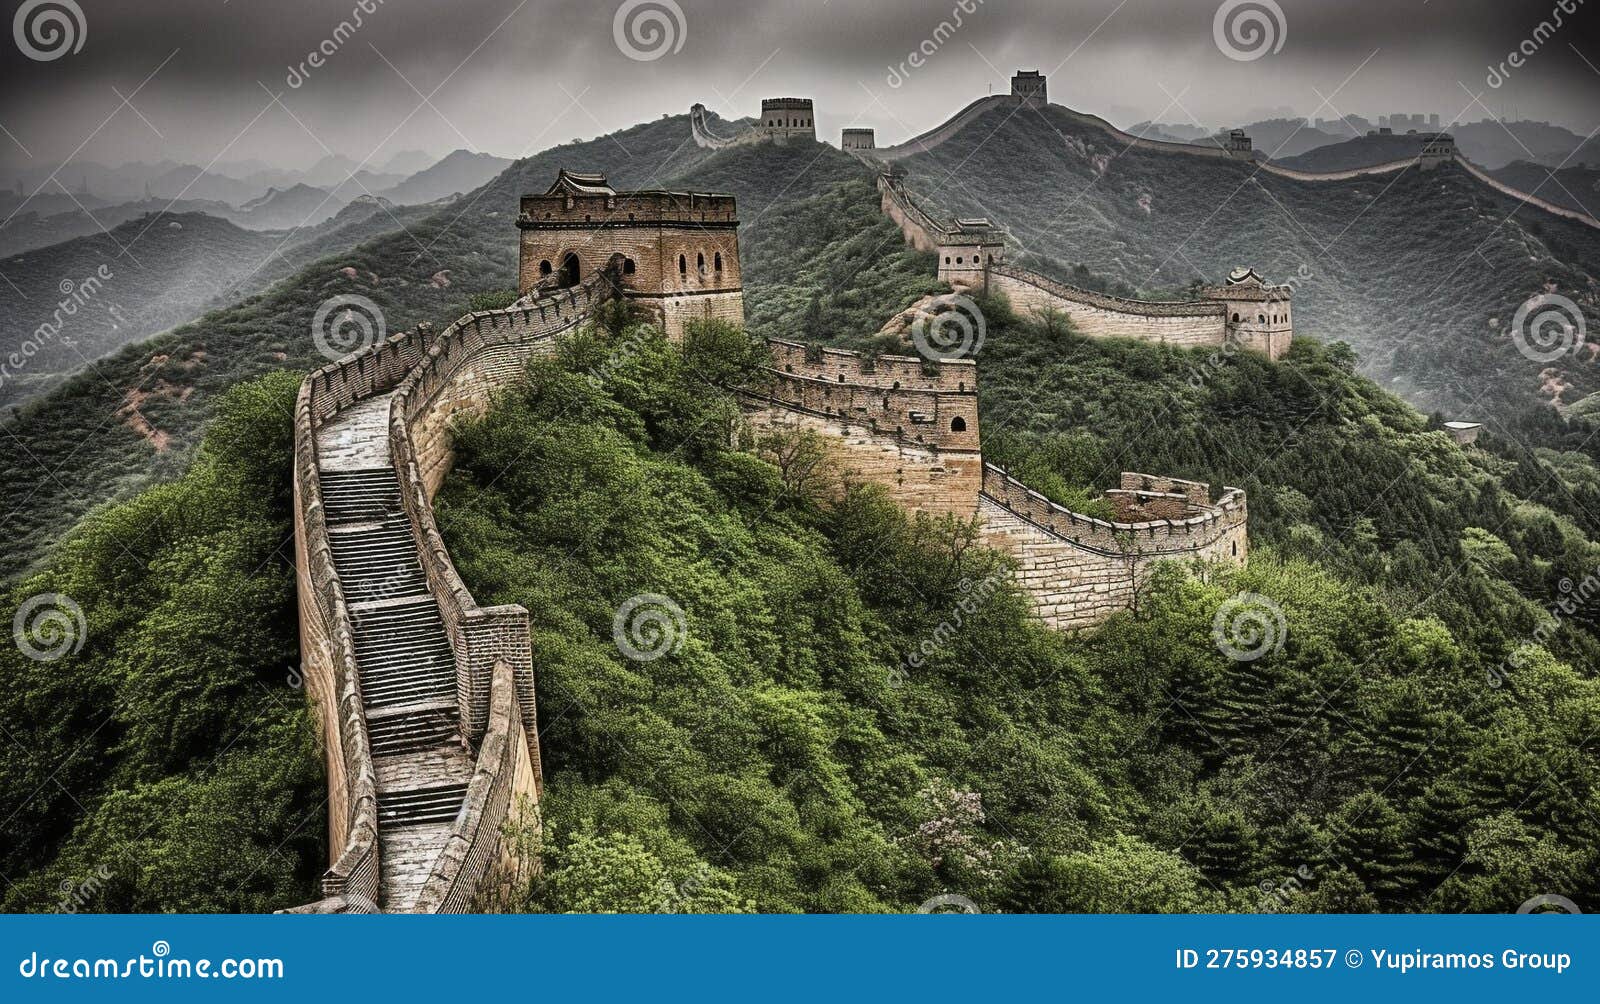 ancient wall of jinshangling, awe inspiring mountain range generated by ai